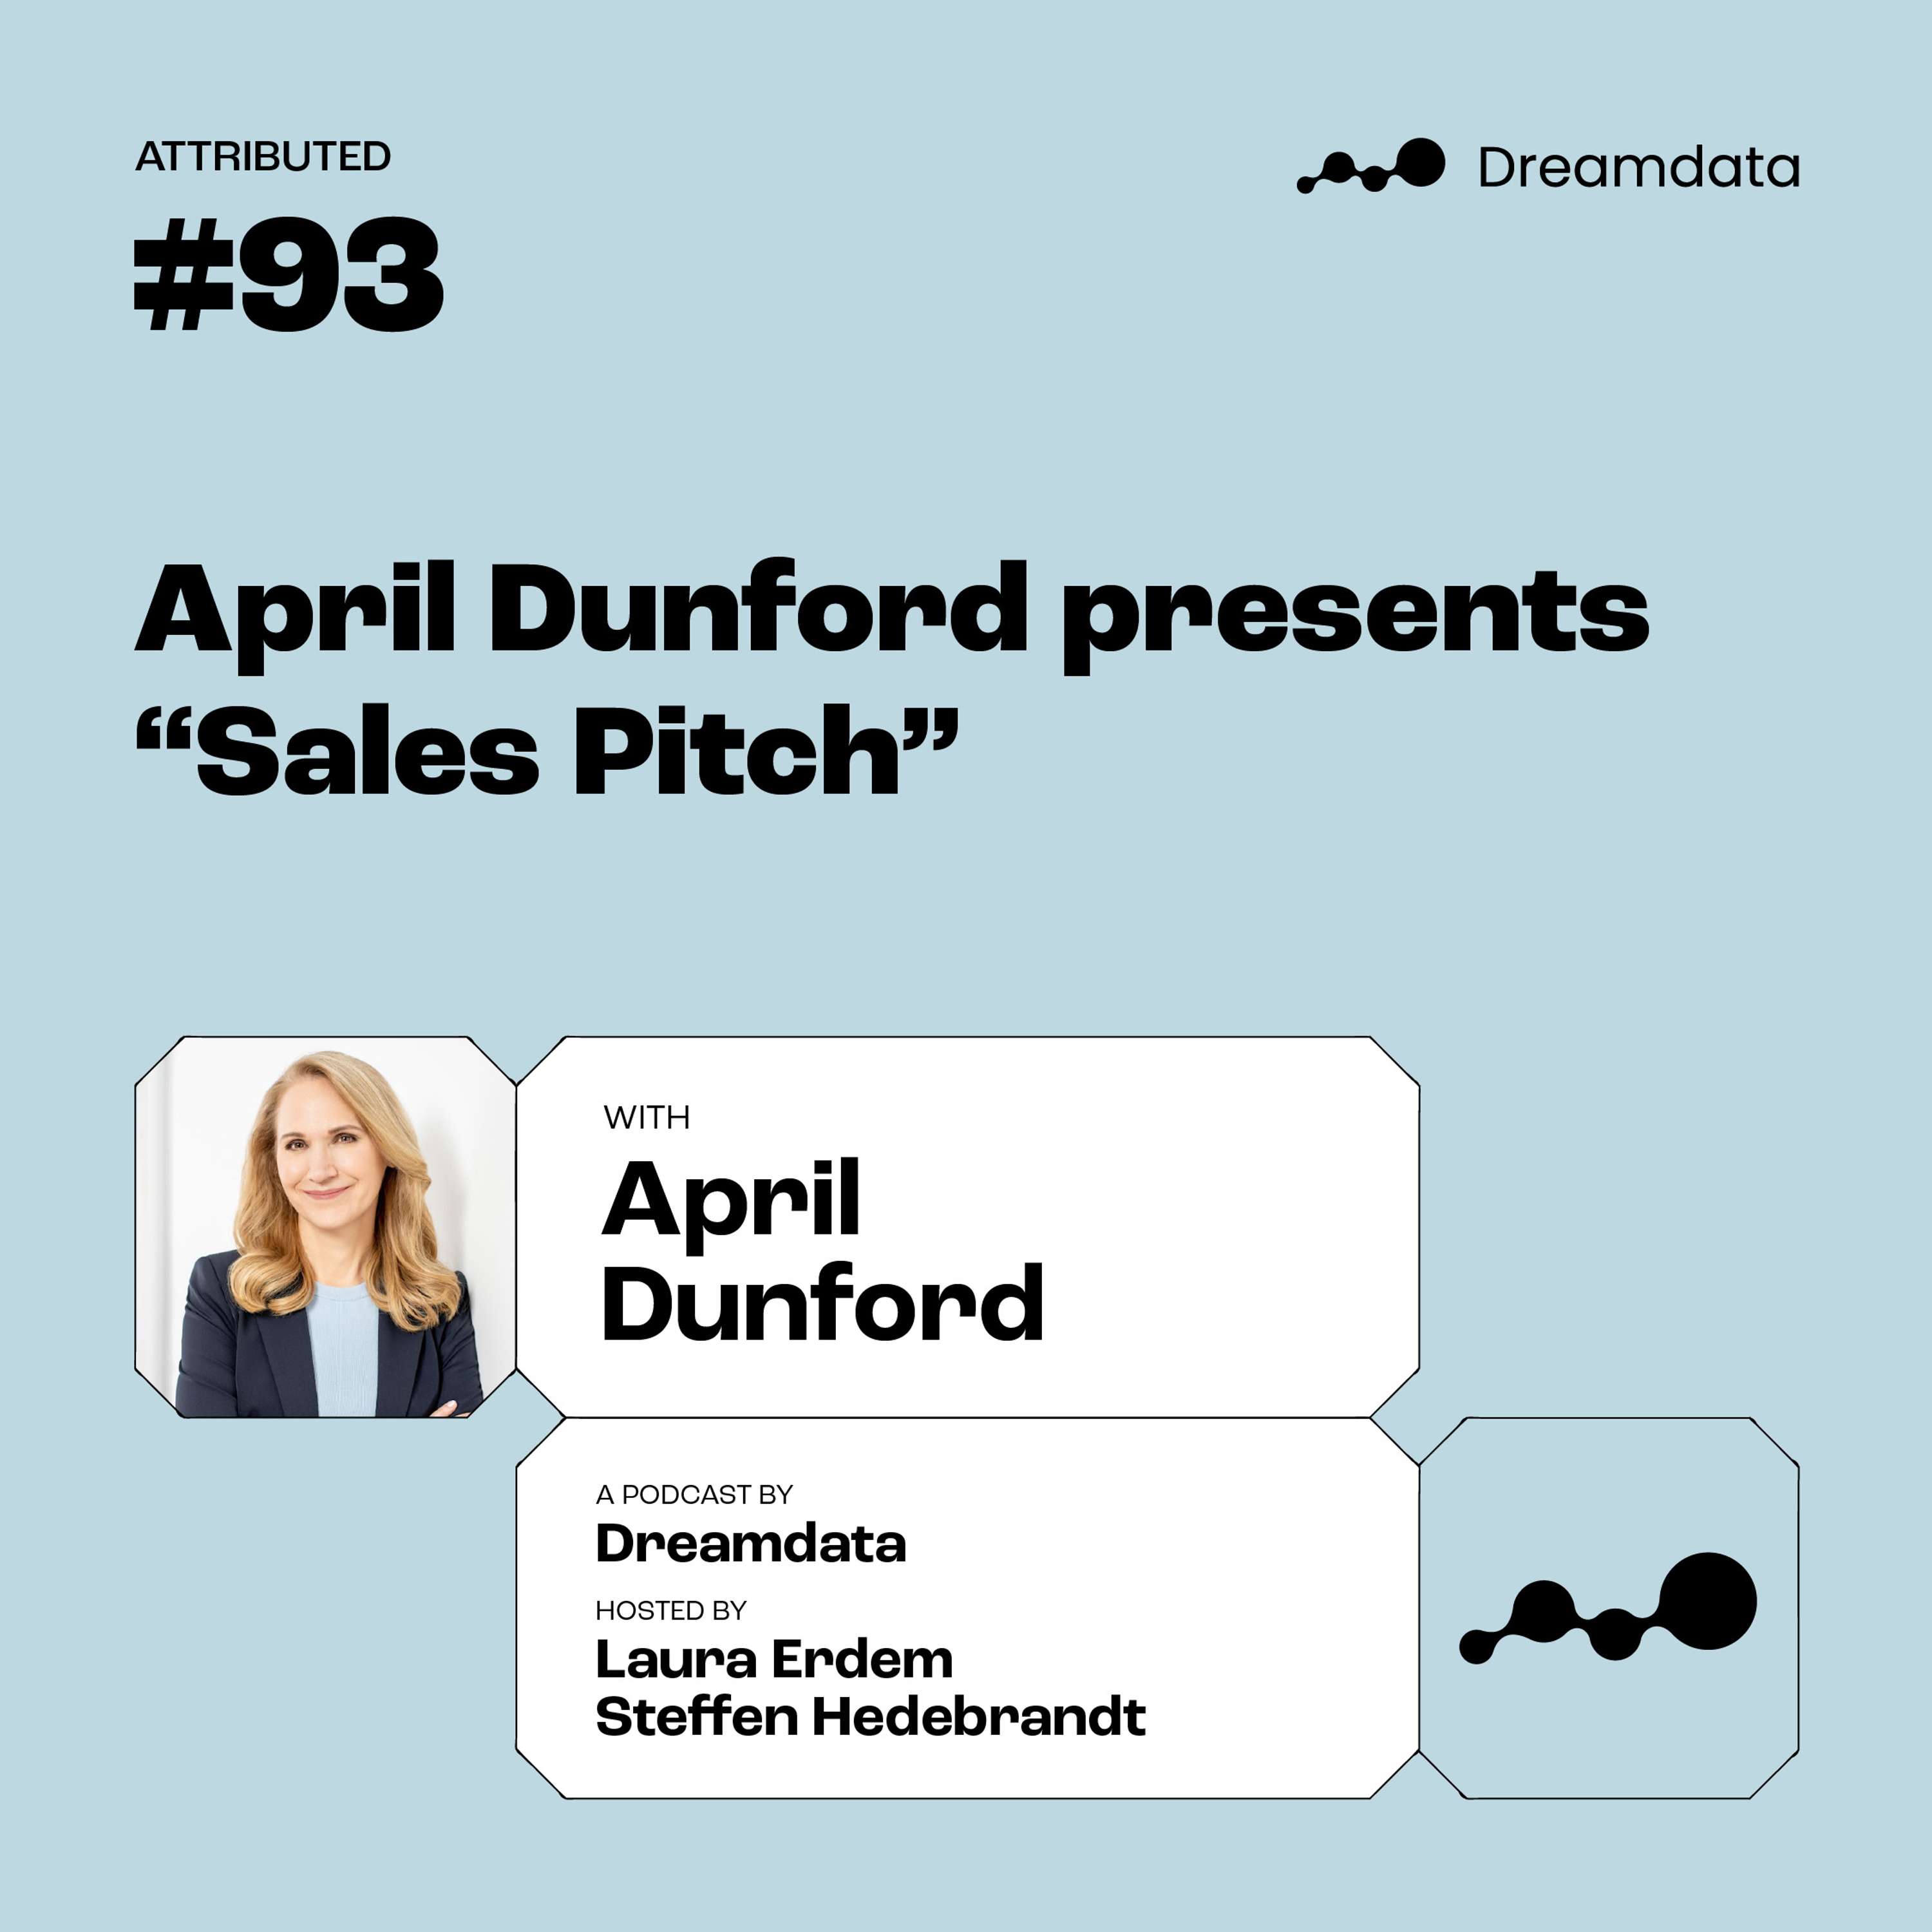 April Dunford presents “Sales Pitch”